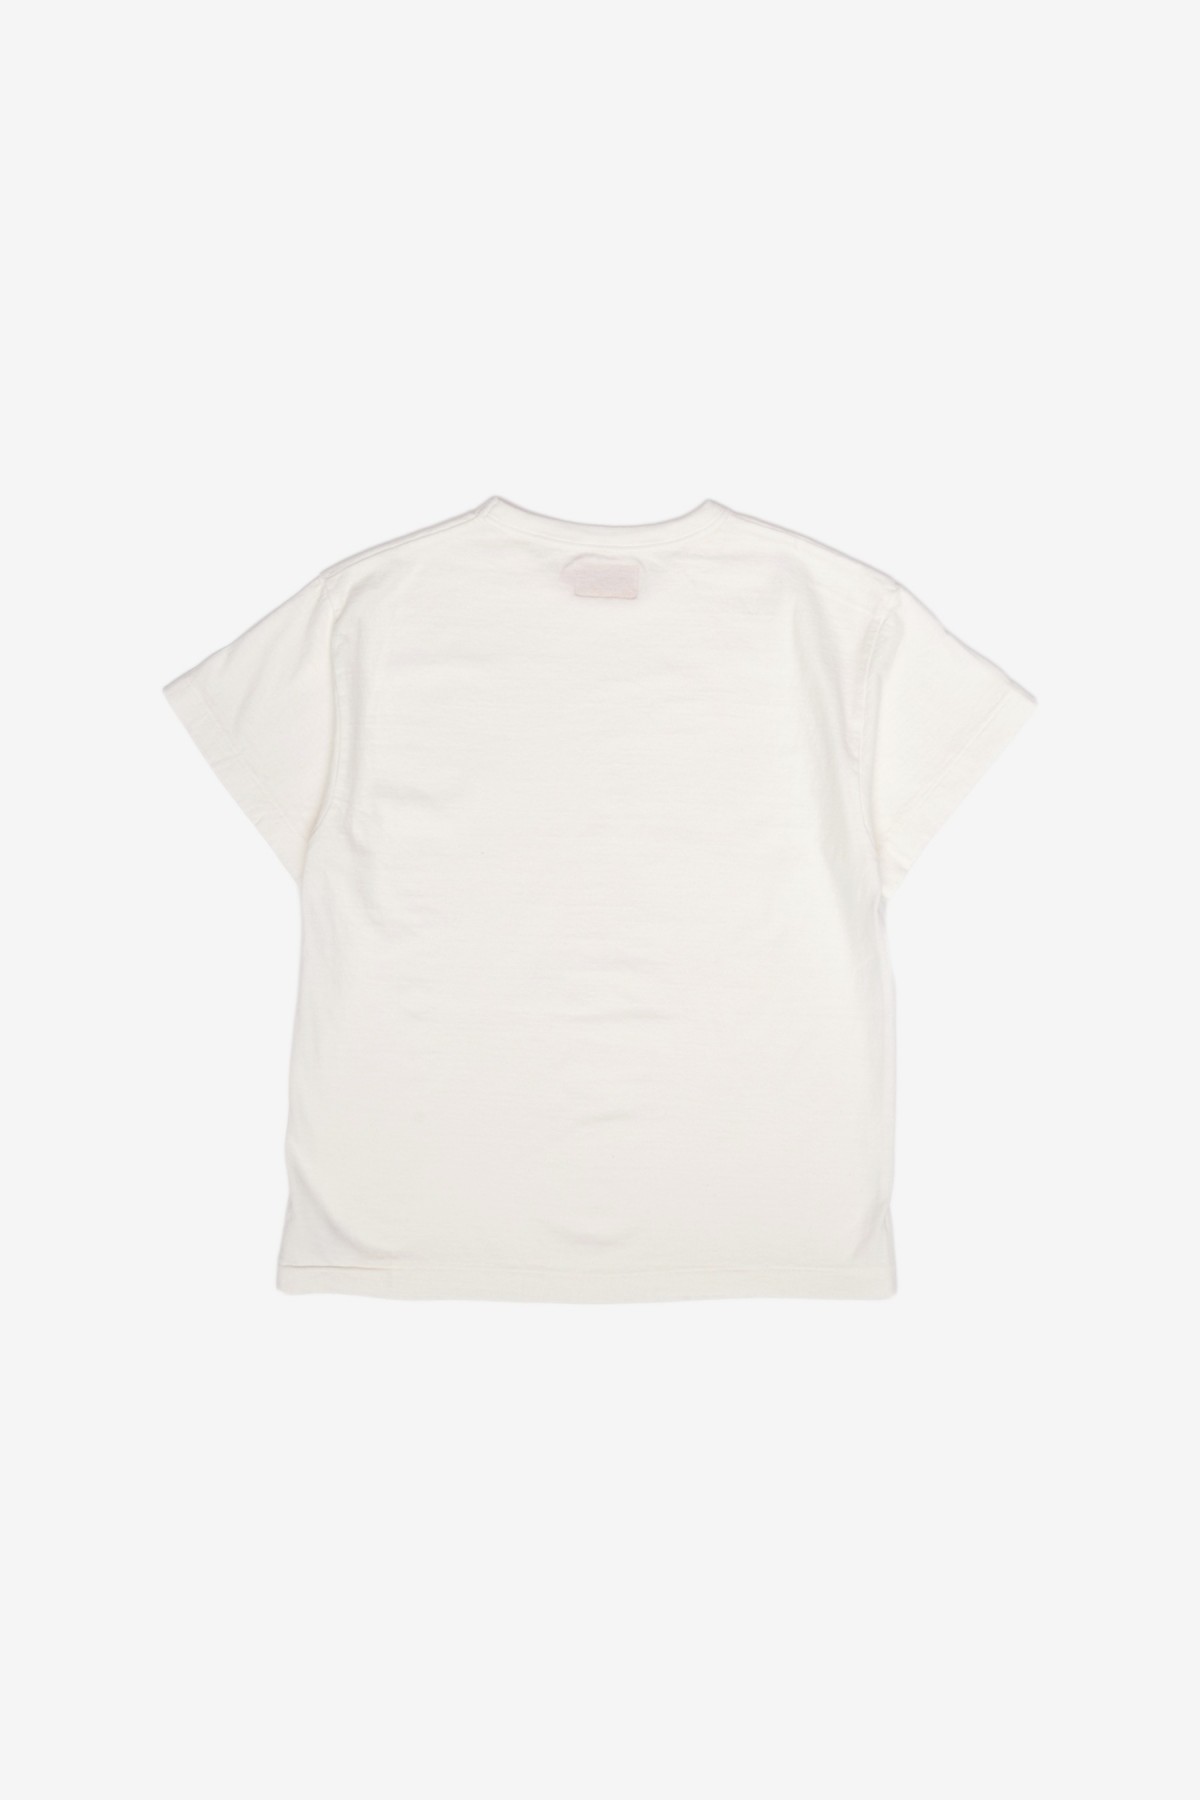 Sunray Sportswear Na'Maka'Oh Short Sleeve T-Shirt in Off White